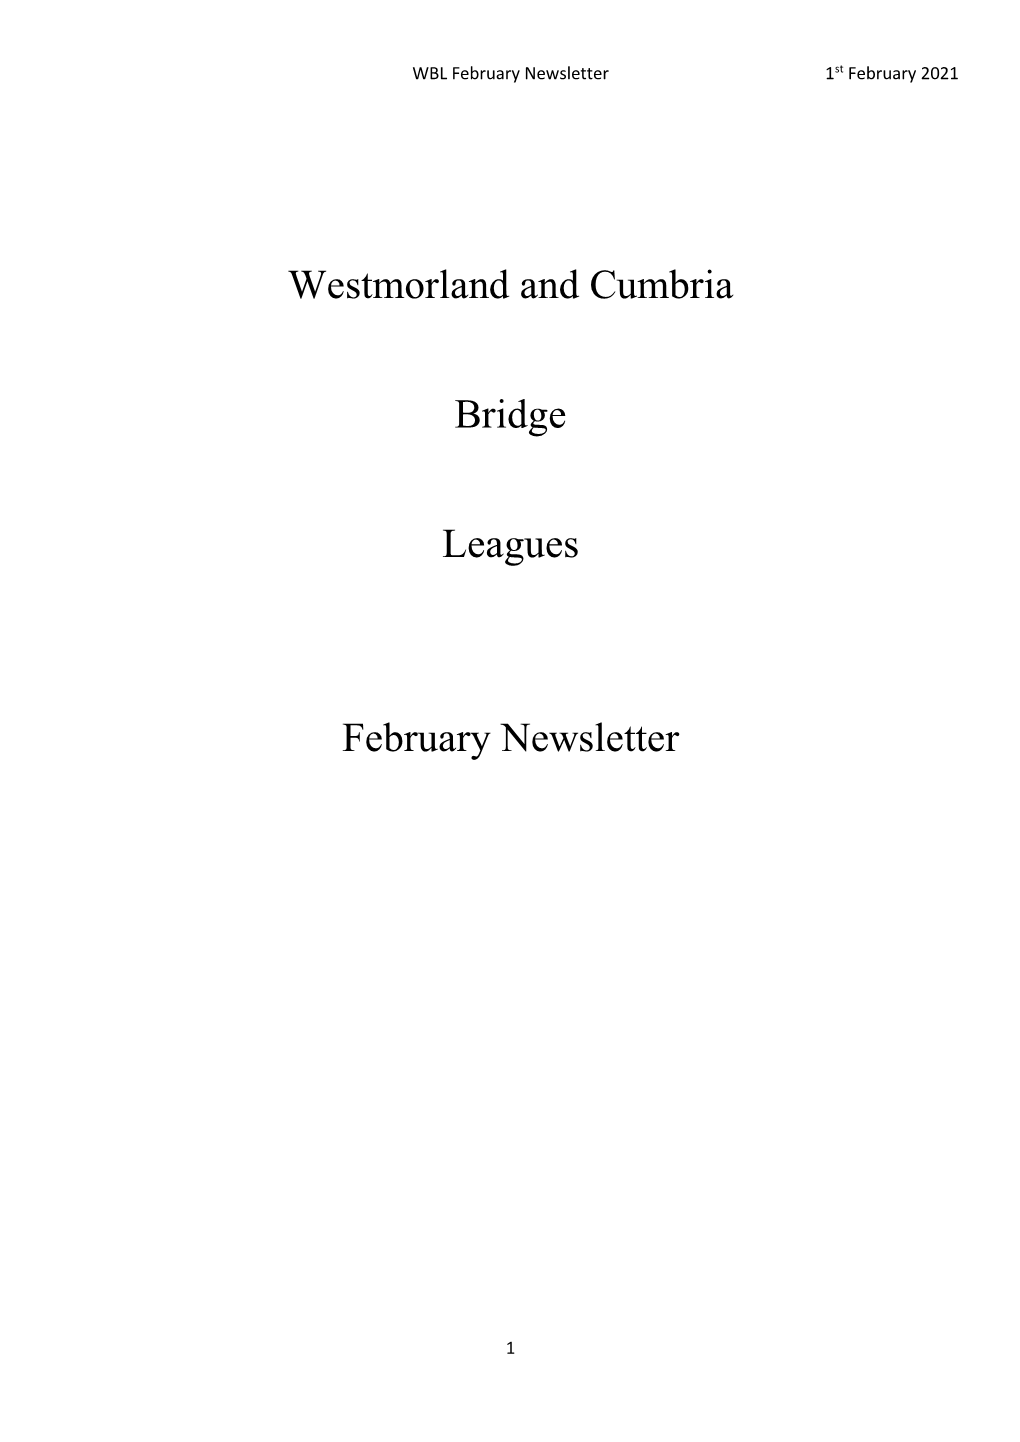 Westmorland and Cumbria Bridge Leagues February